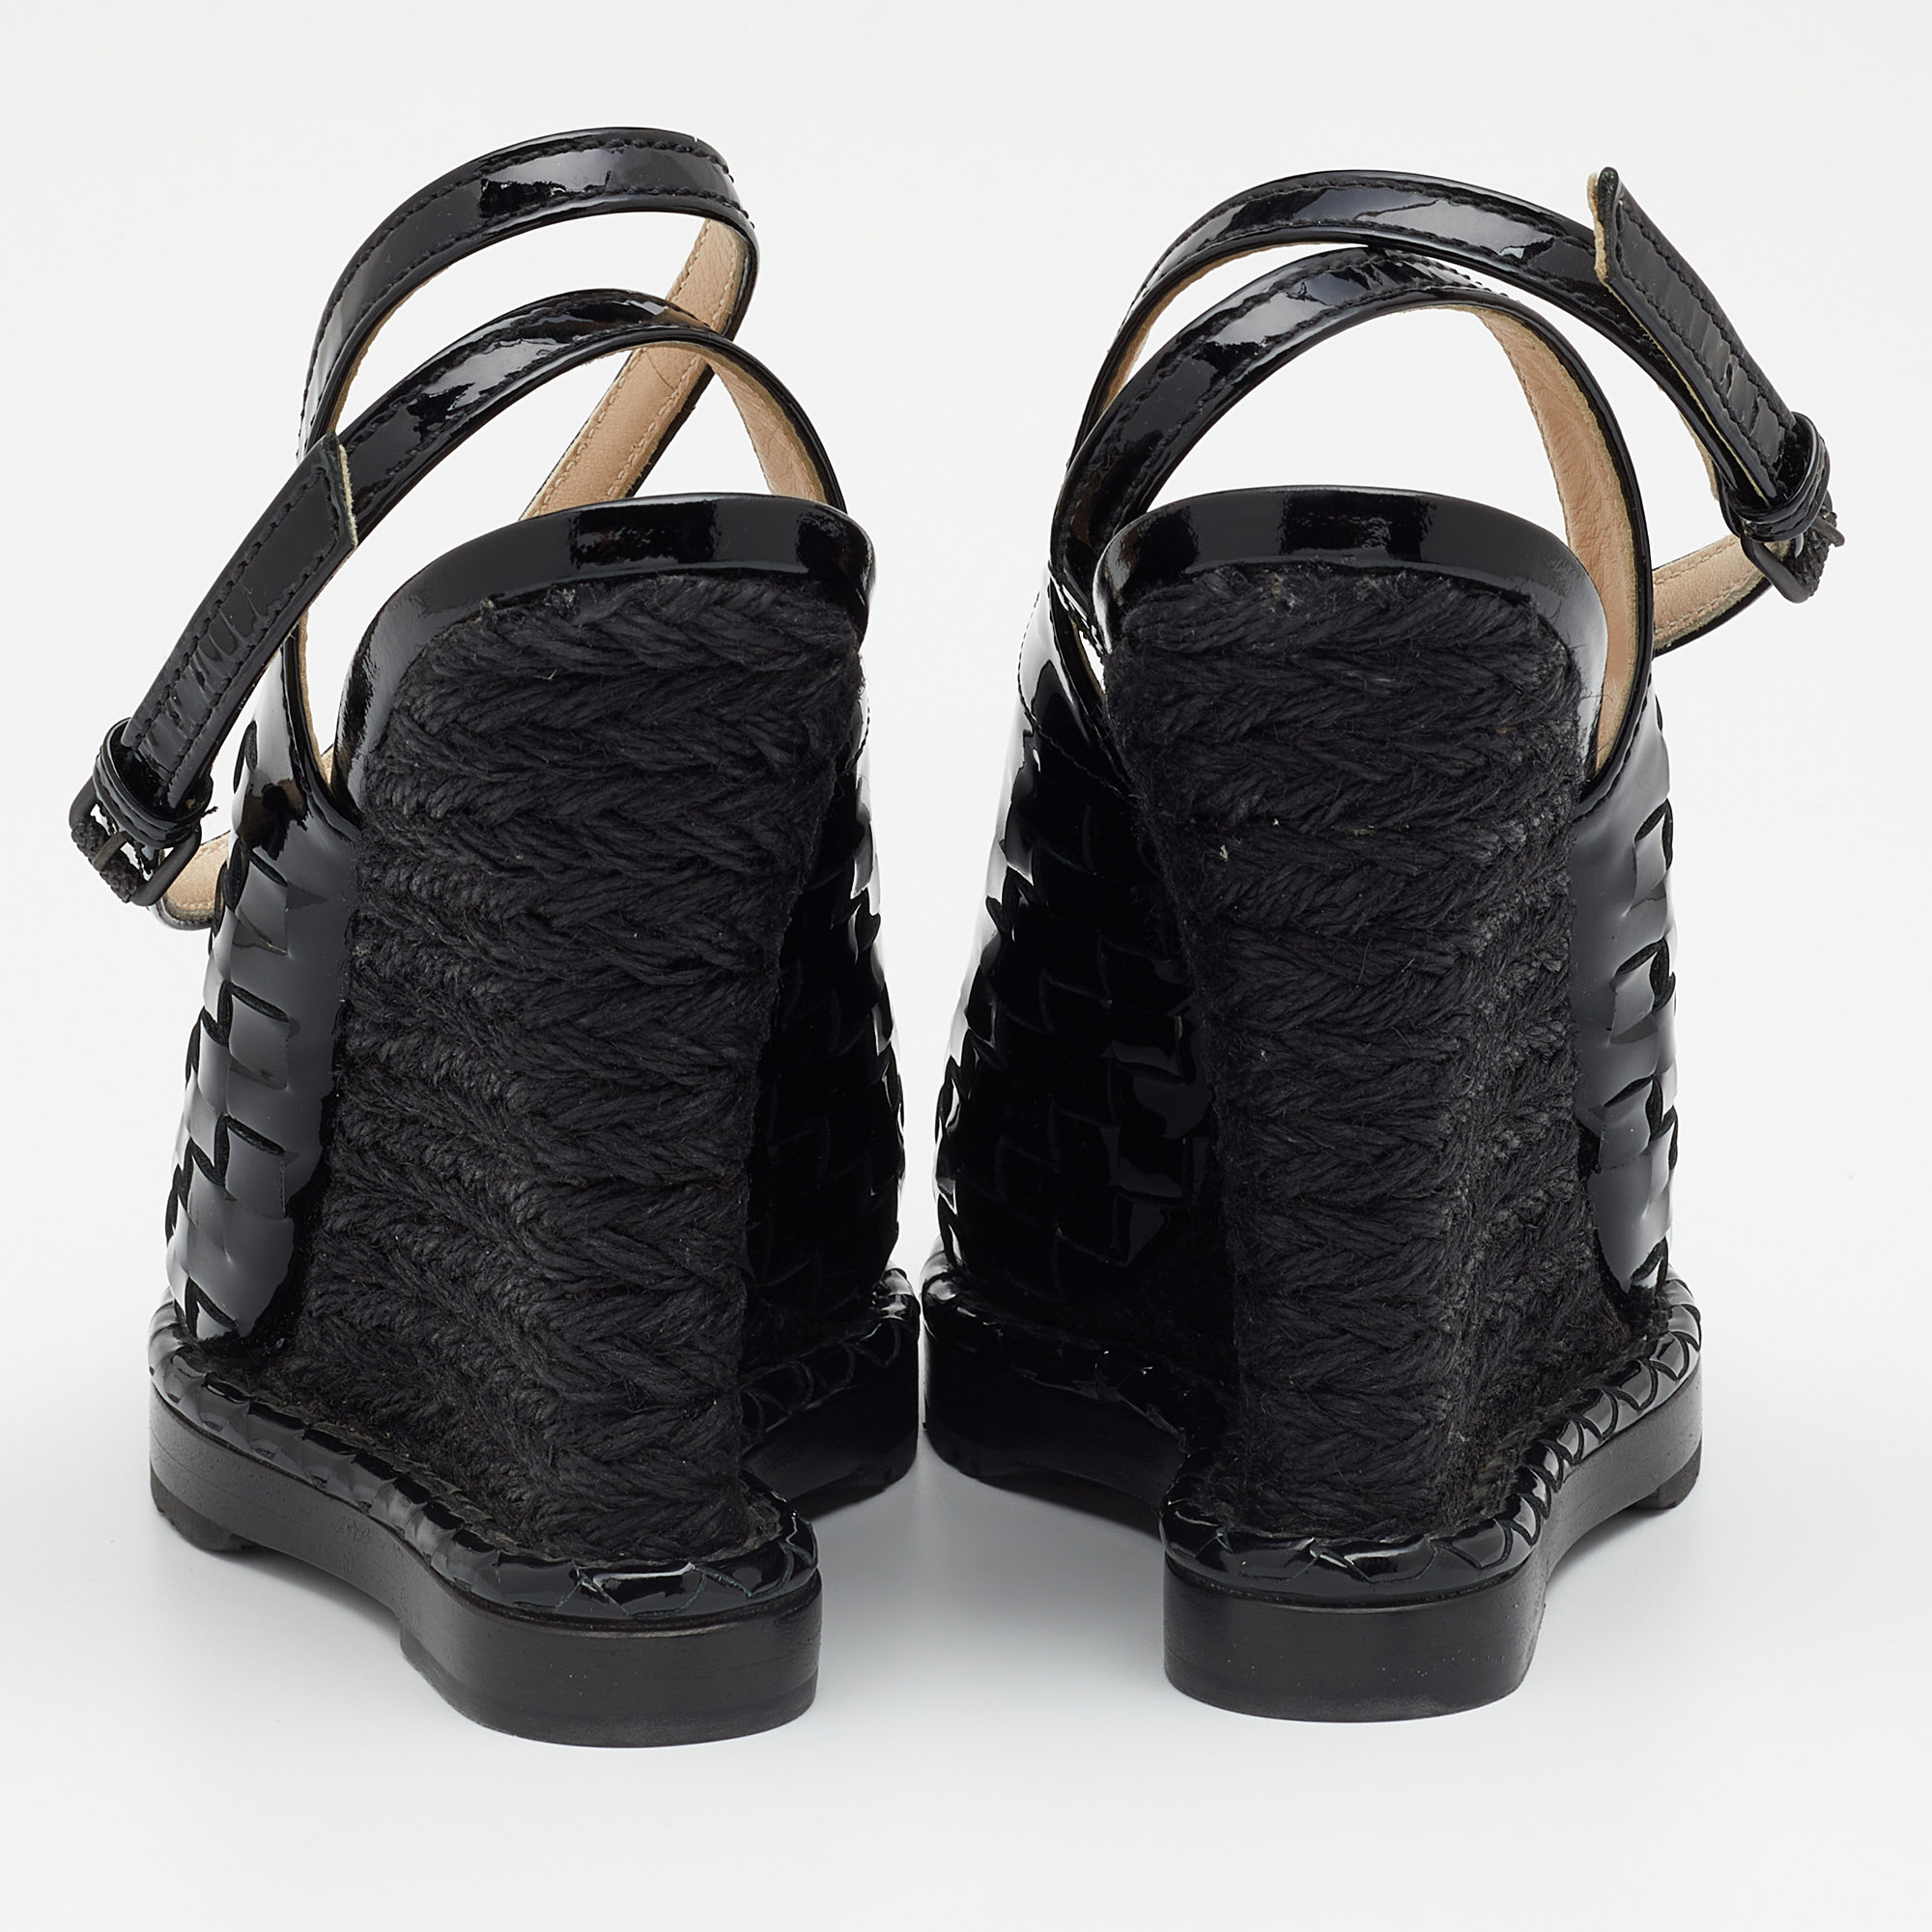 Bottega Veneta Black Intrecciato Patent Leather Wedge Sandals Size 38